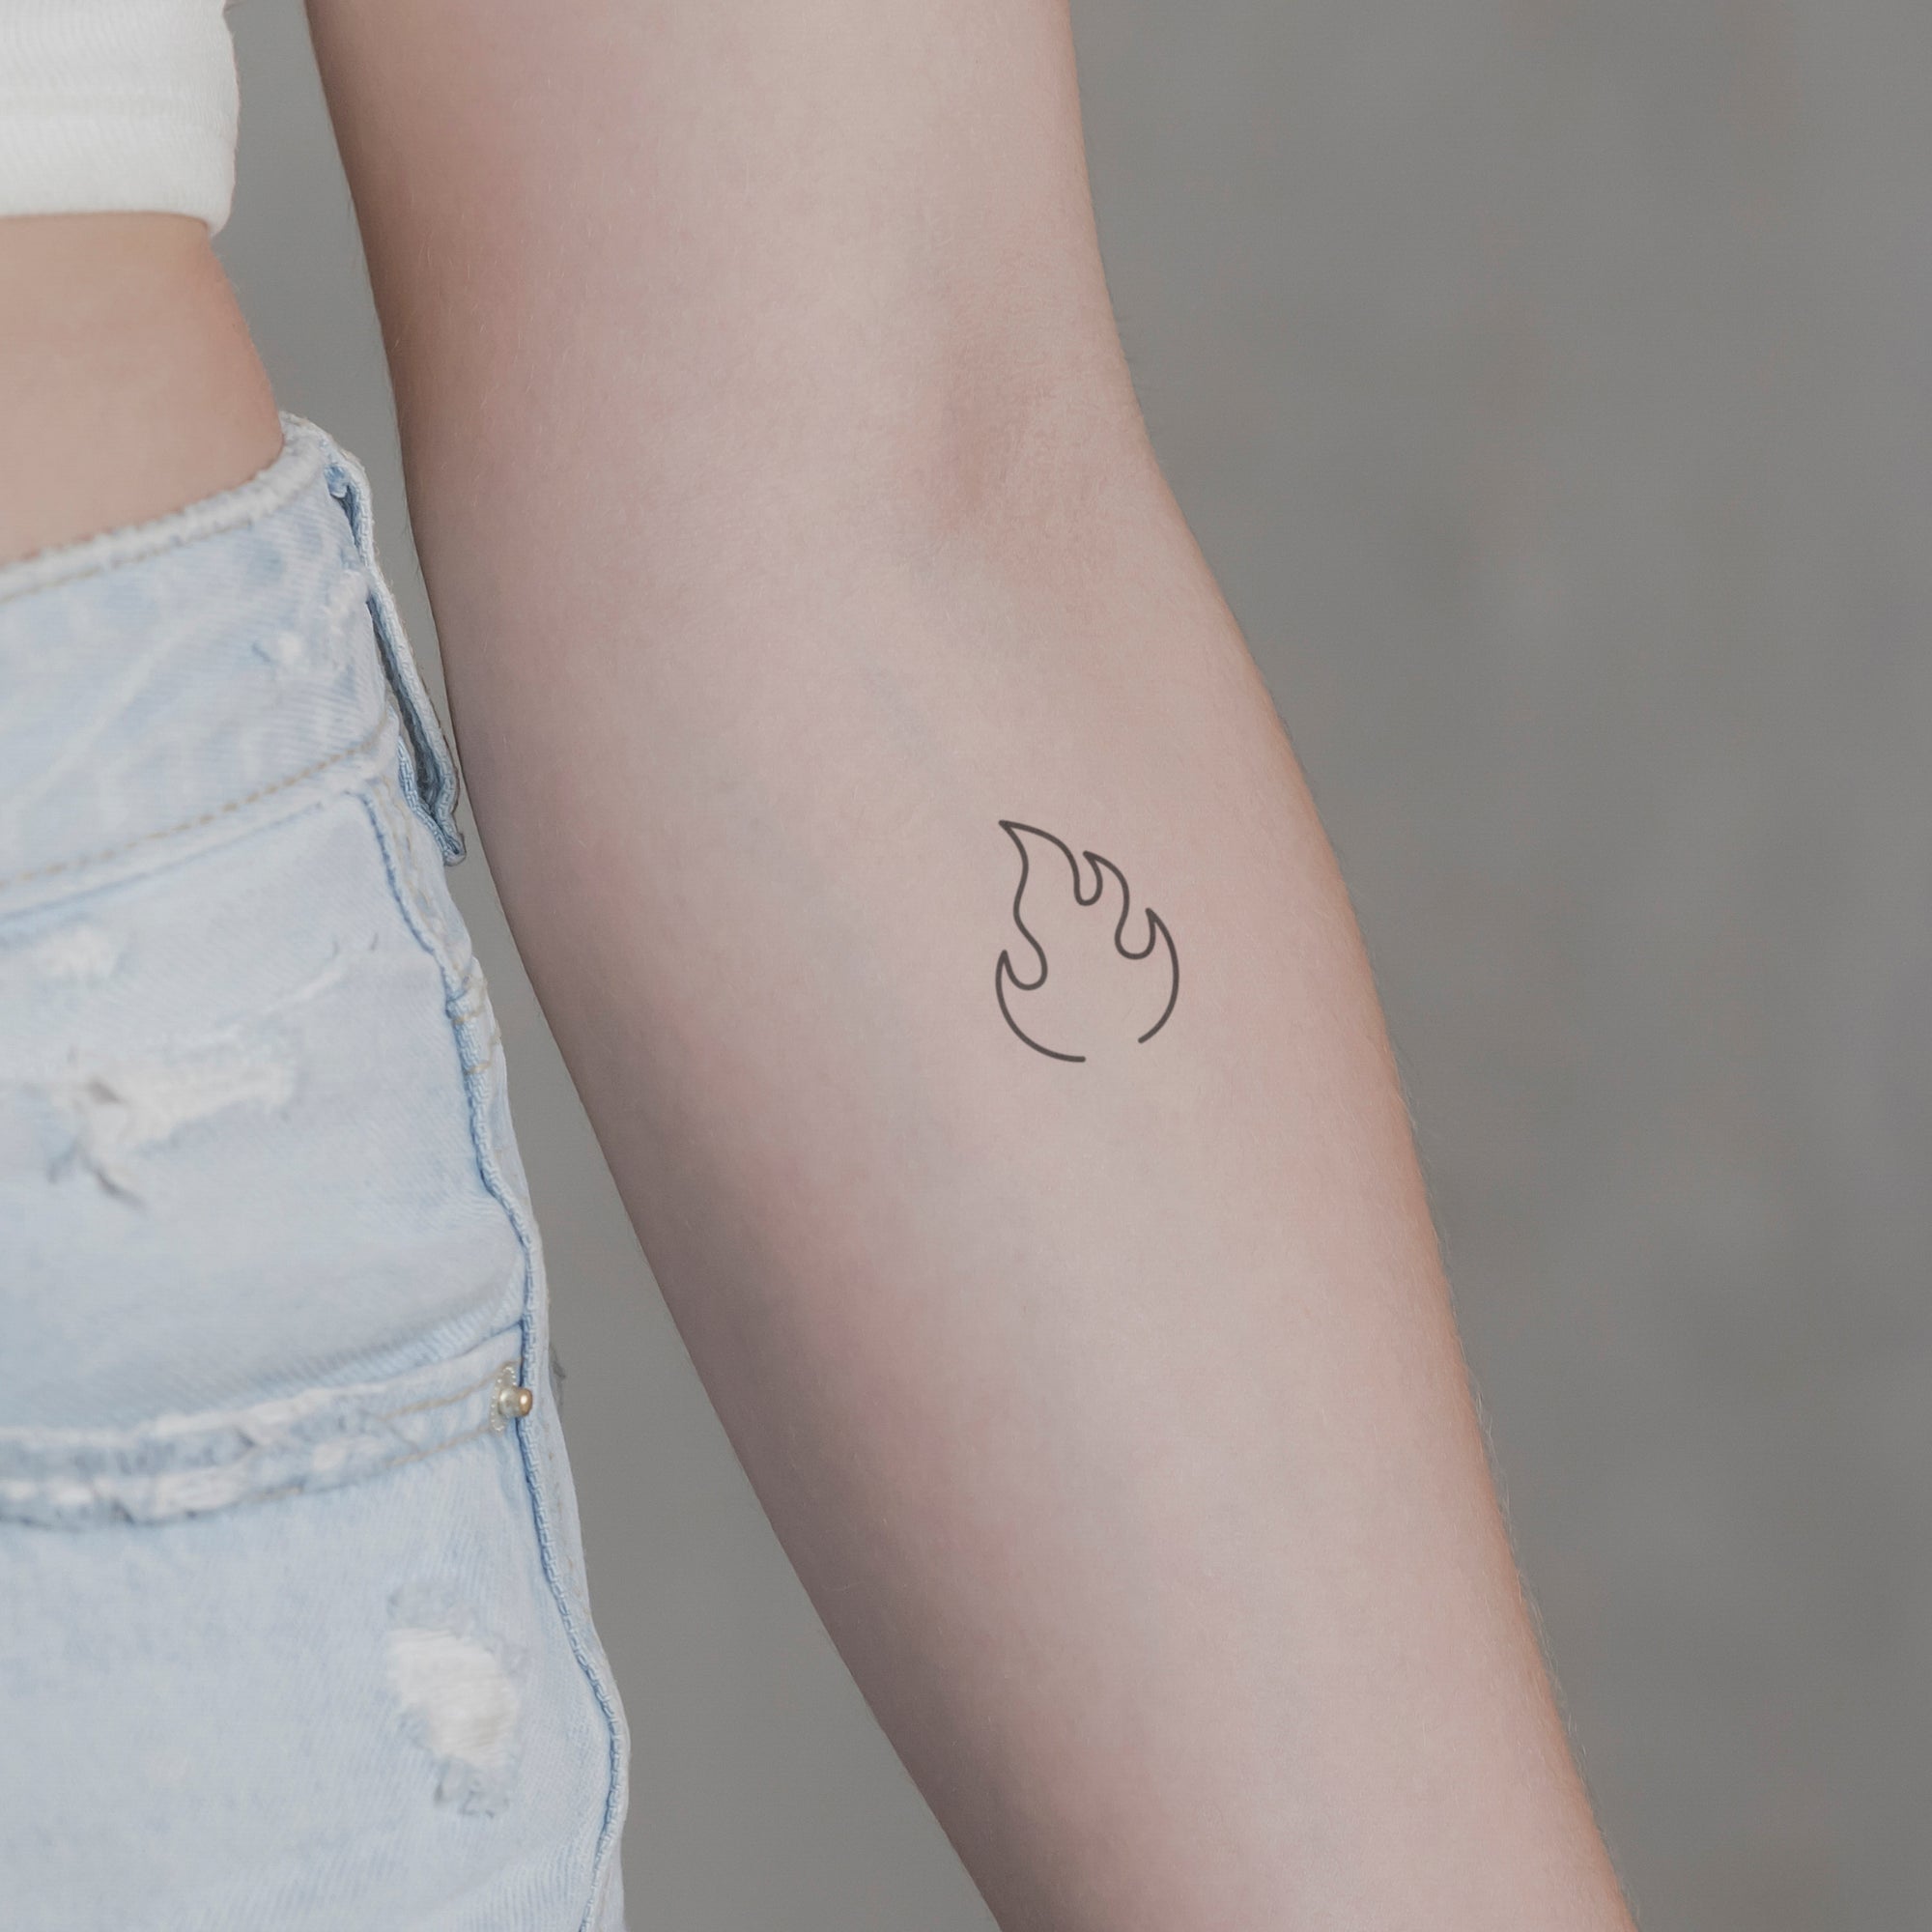 Flame Tattoos - Tattoos Designs